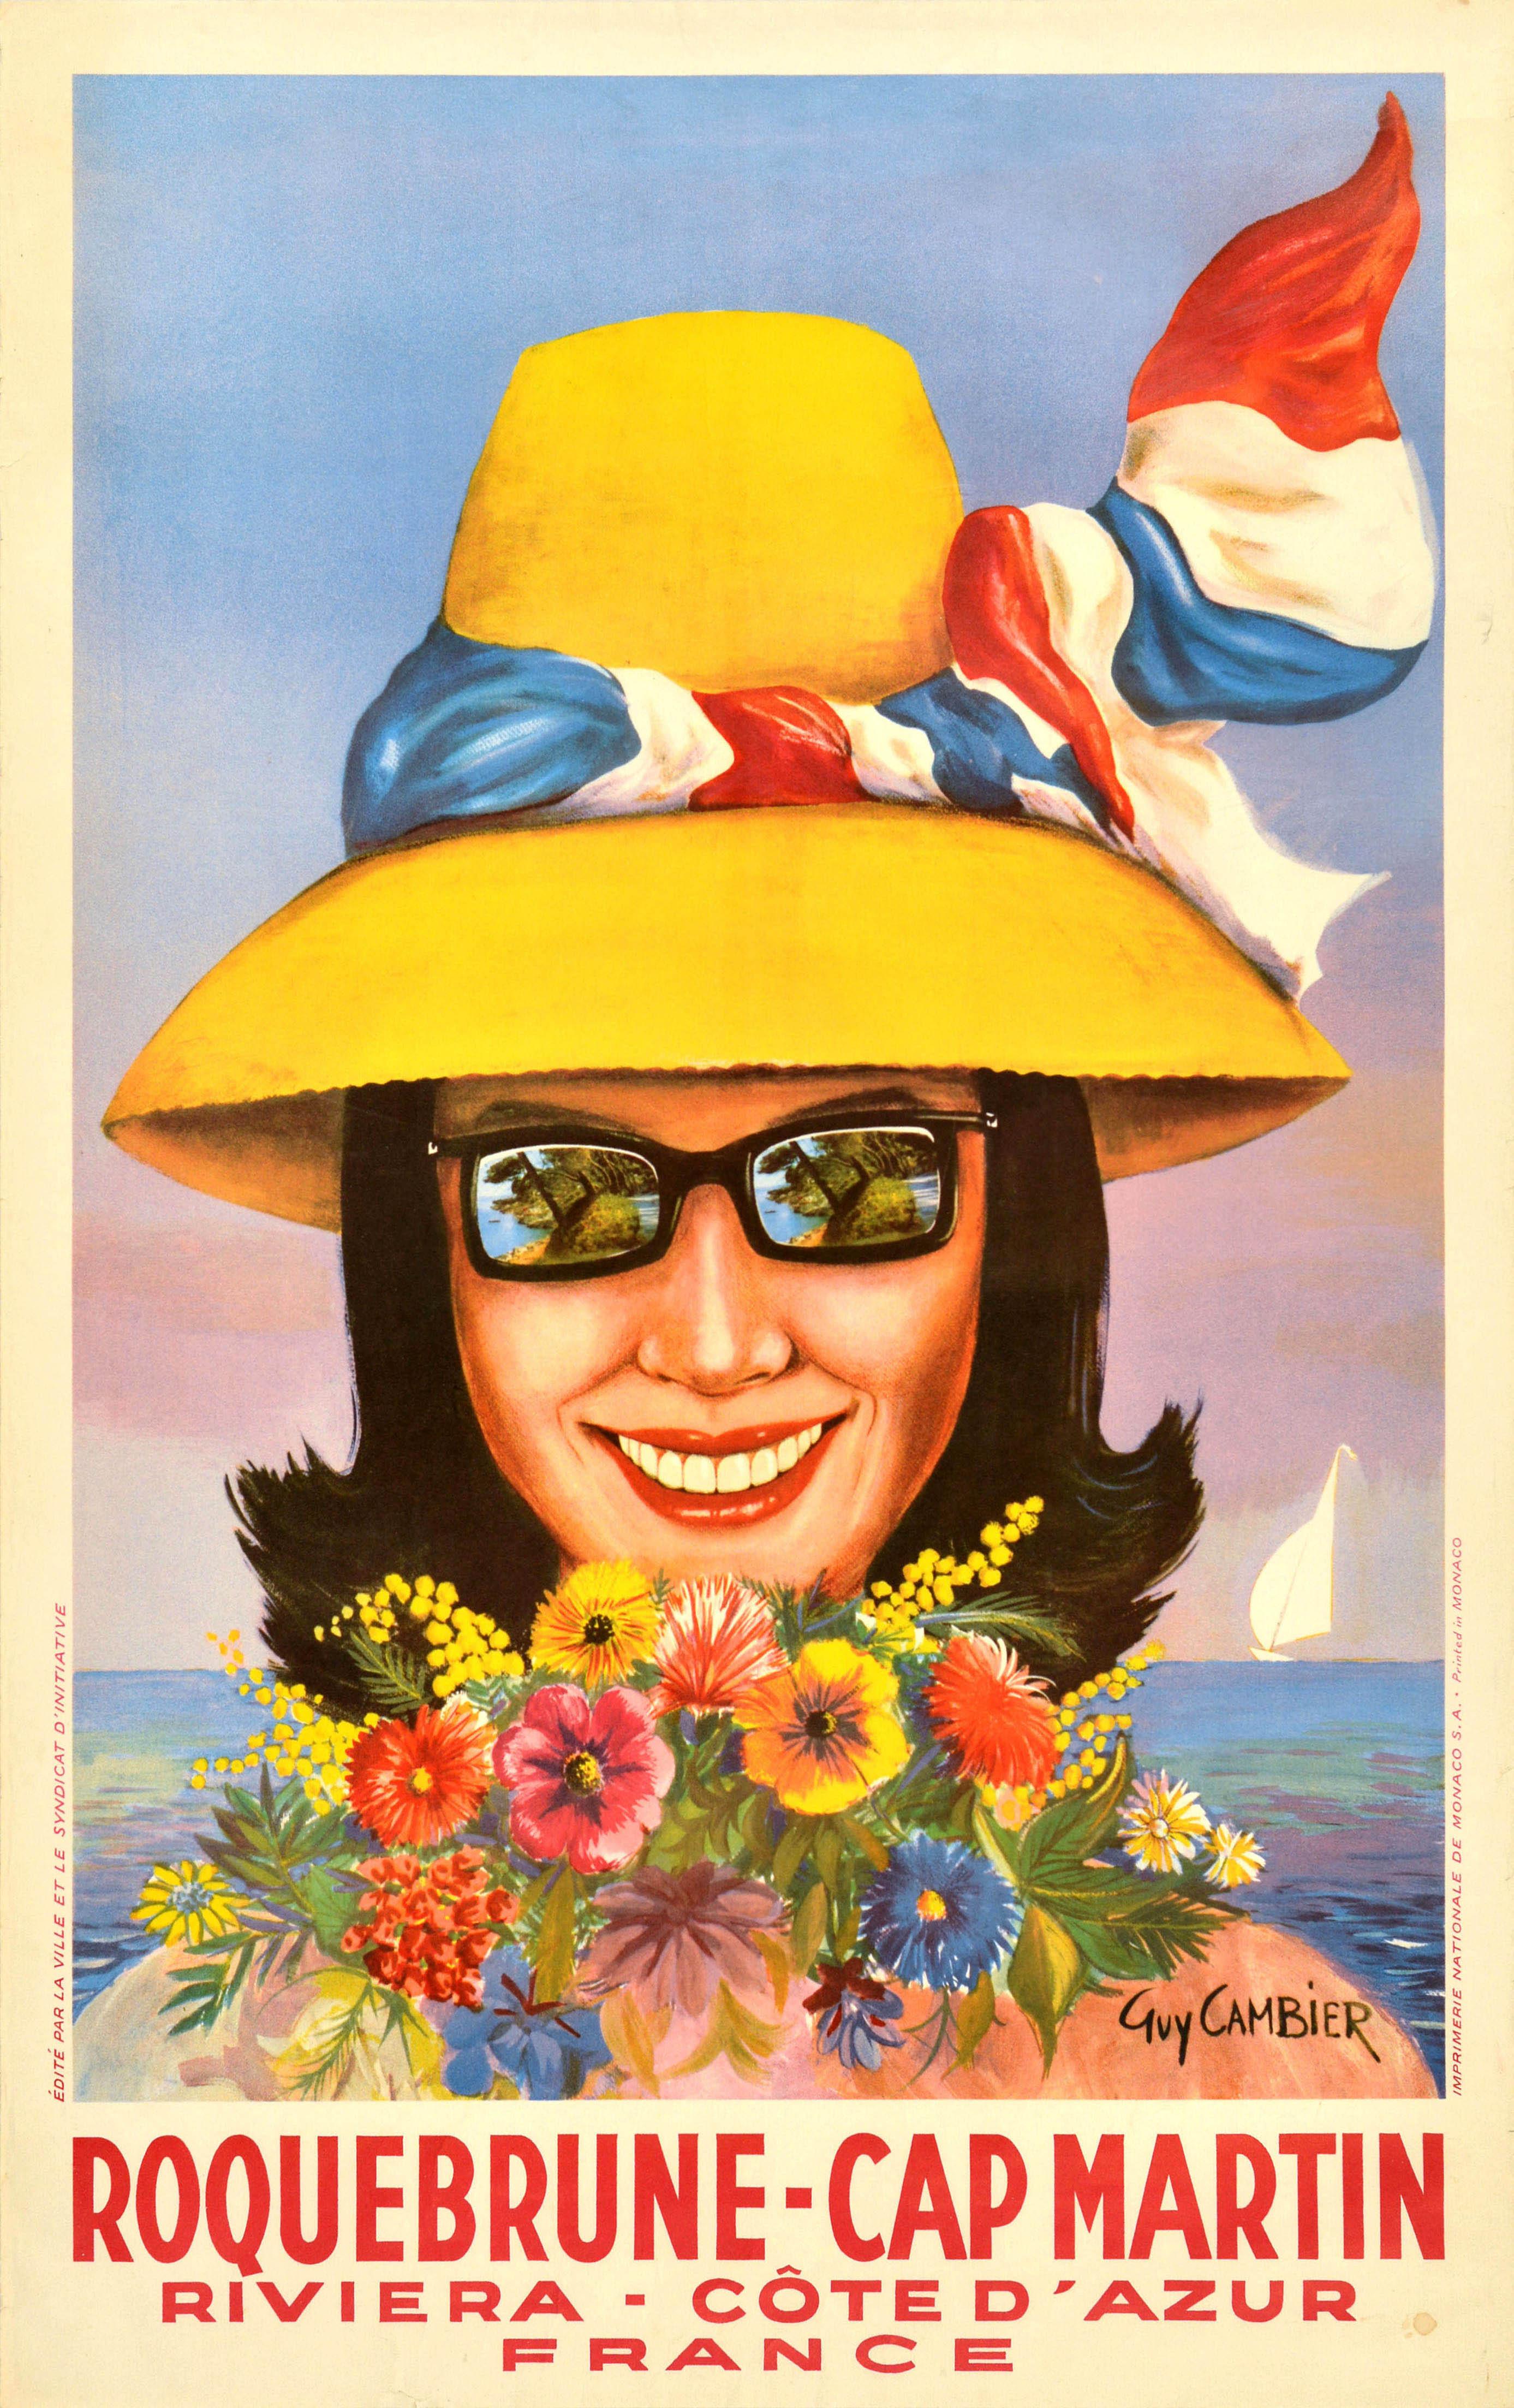 Guy Cambier Print - Original Vintage Travel Poster Roquebrune Cap Martin Riviera Cote d'Azur France